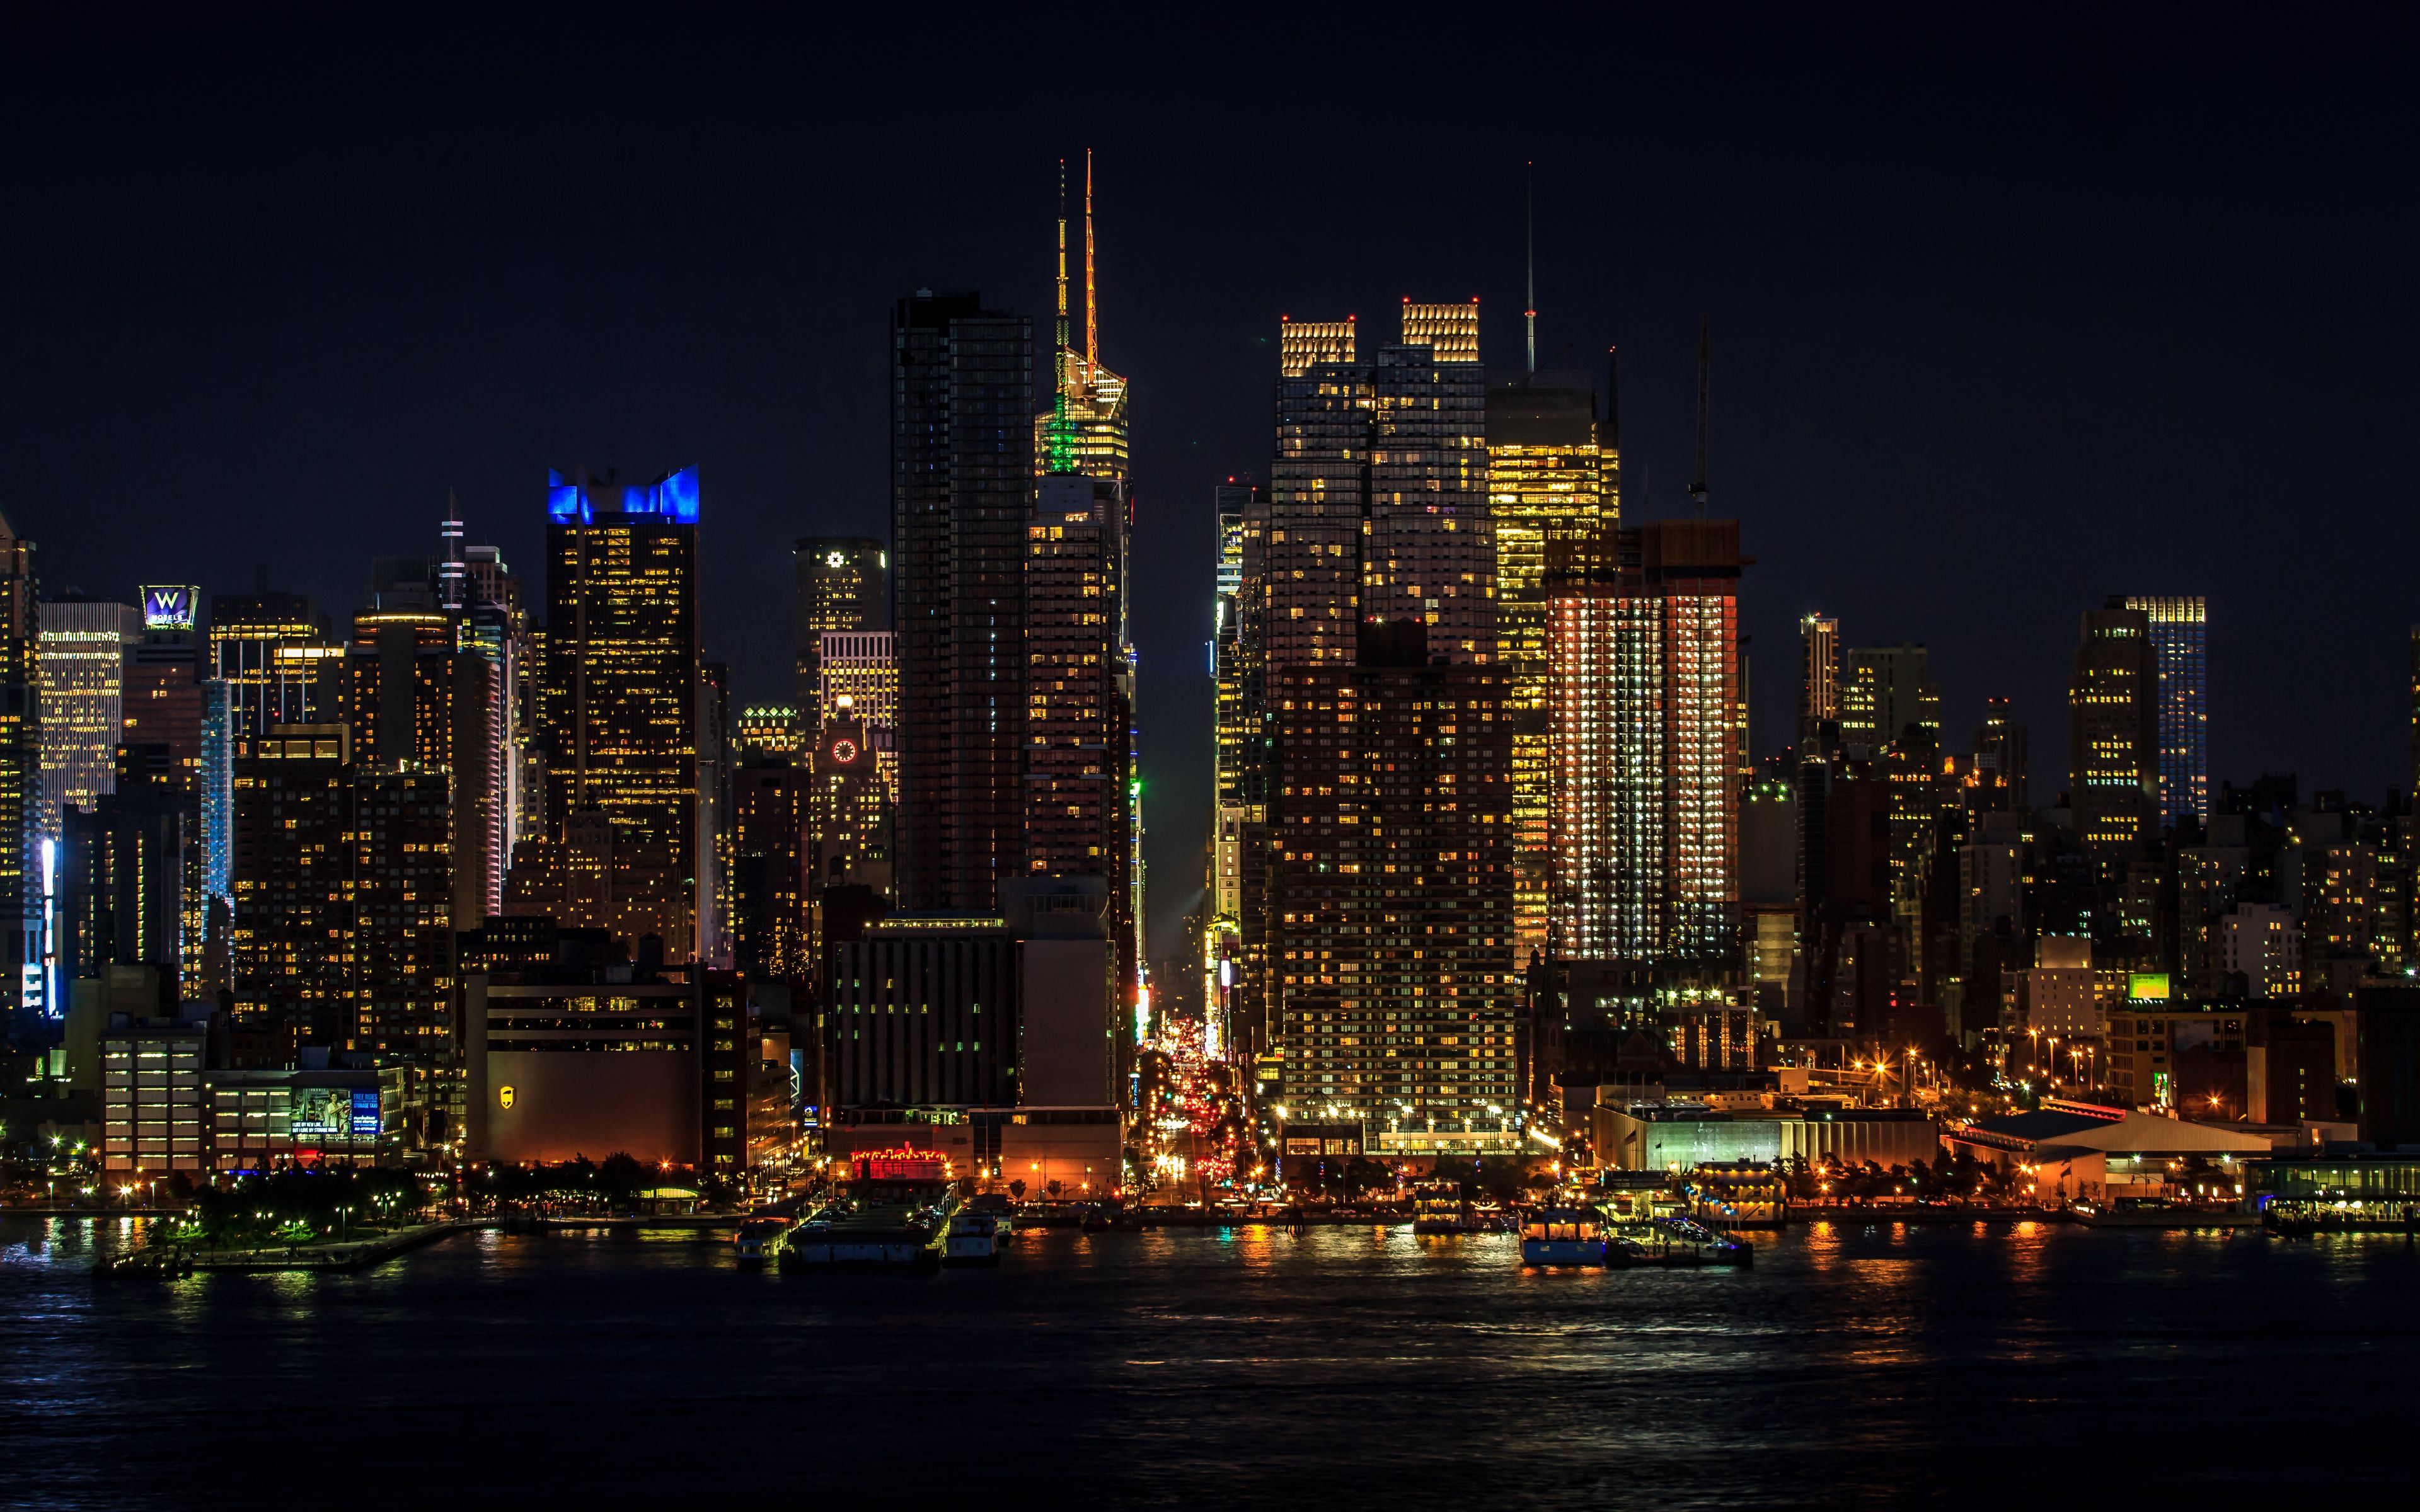 Download wallpaper x cityscape night new york manhattan skyscrapers lights k ultra hd hd background